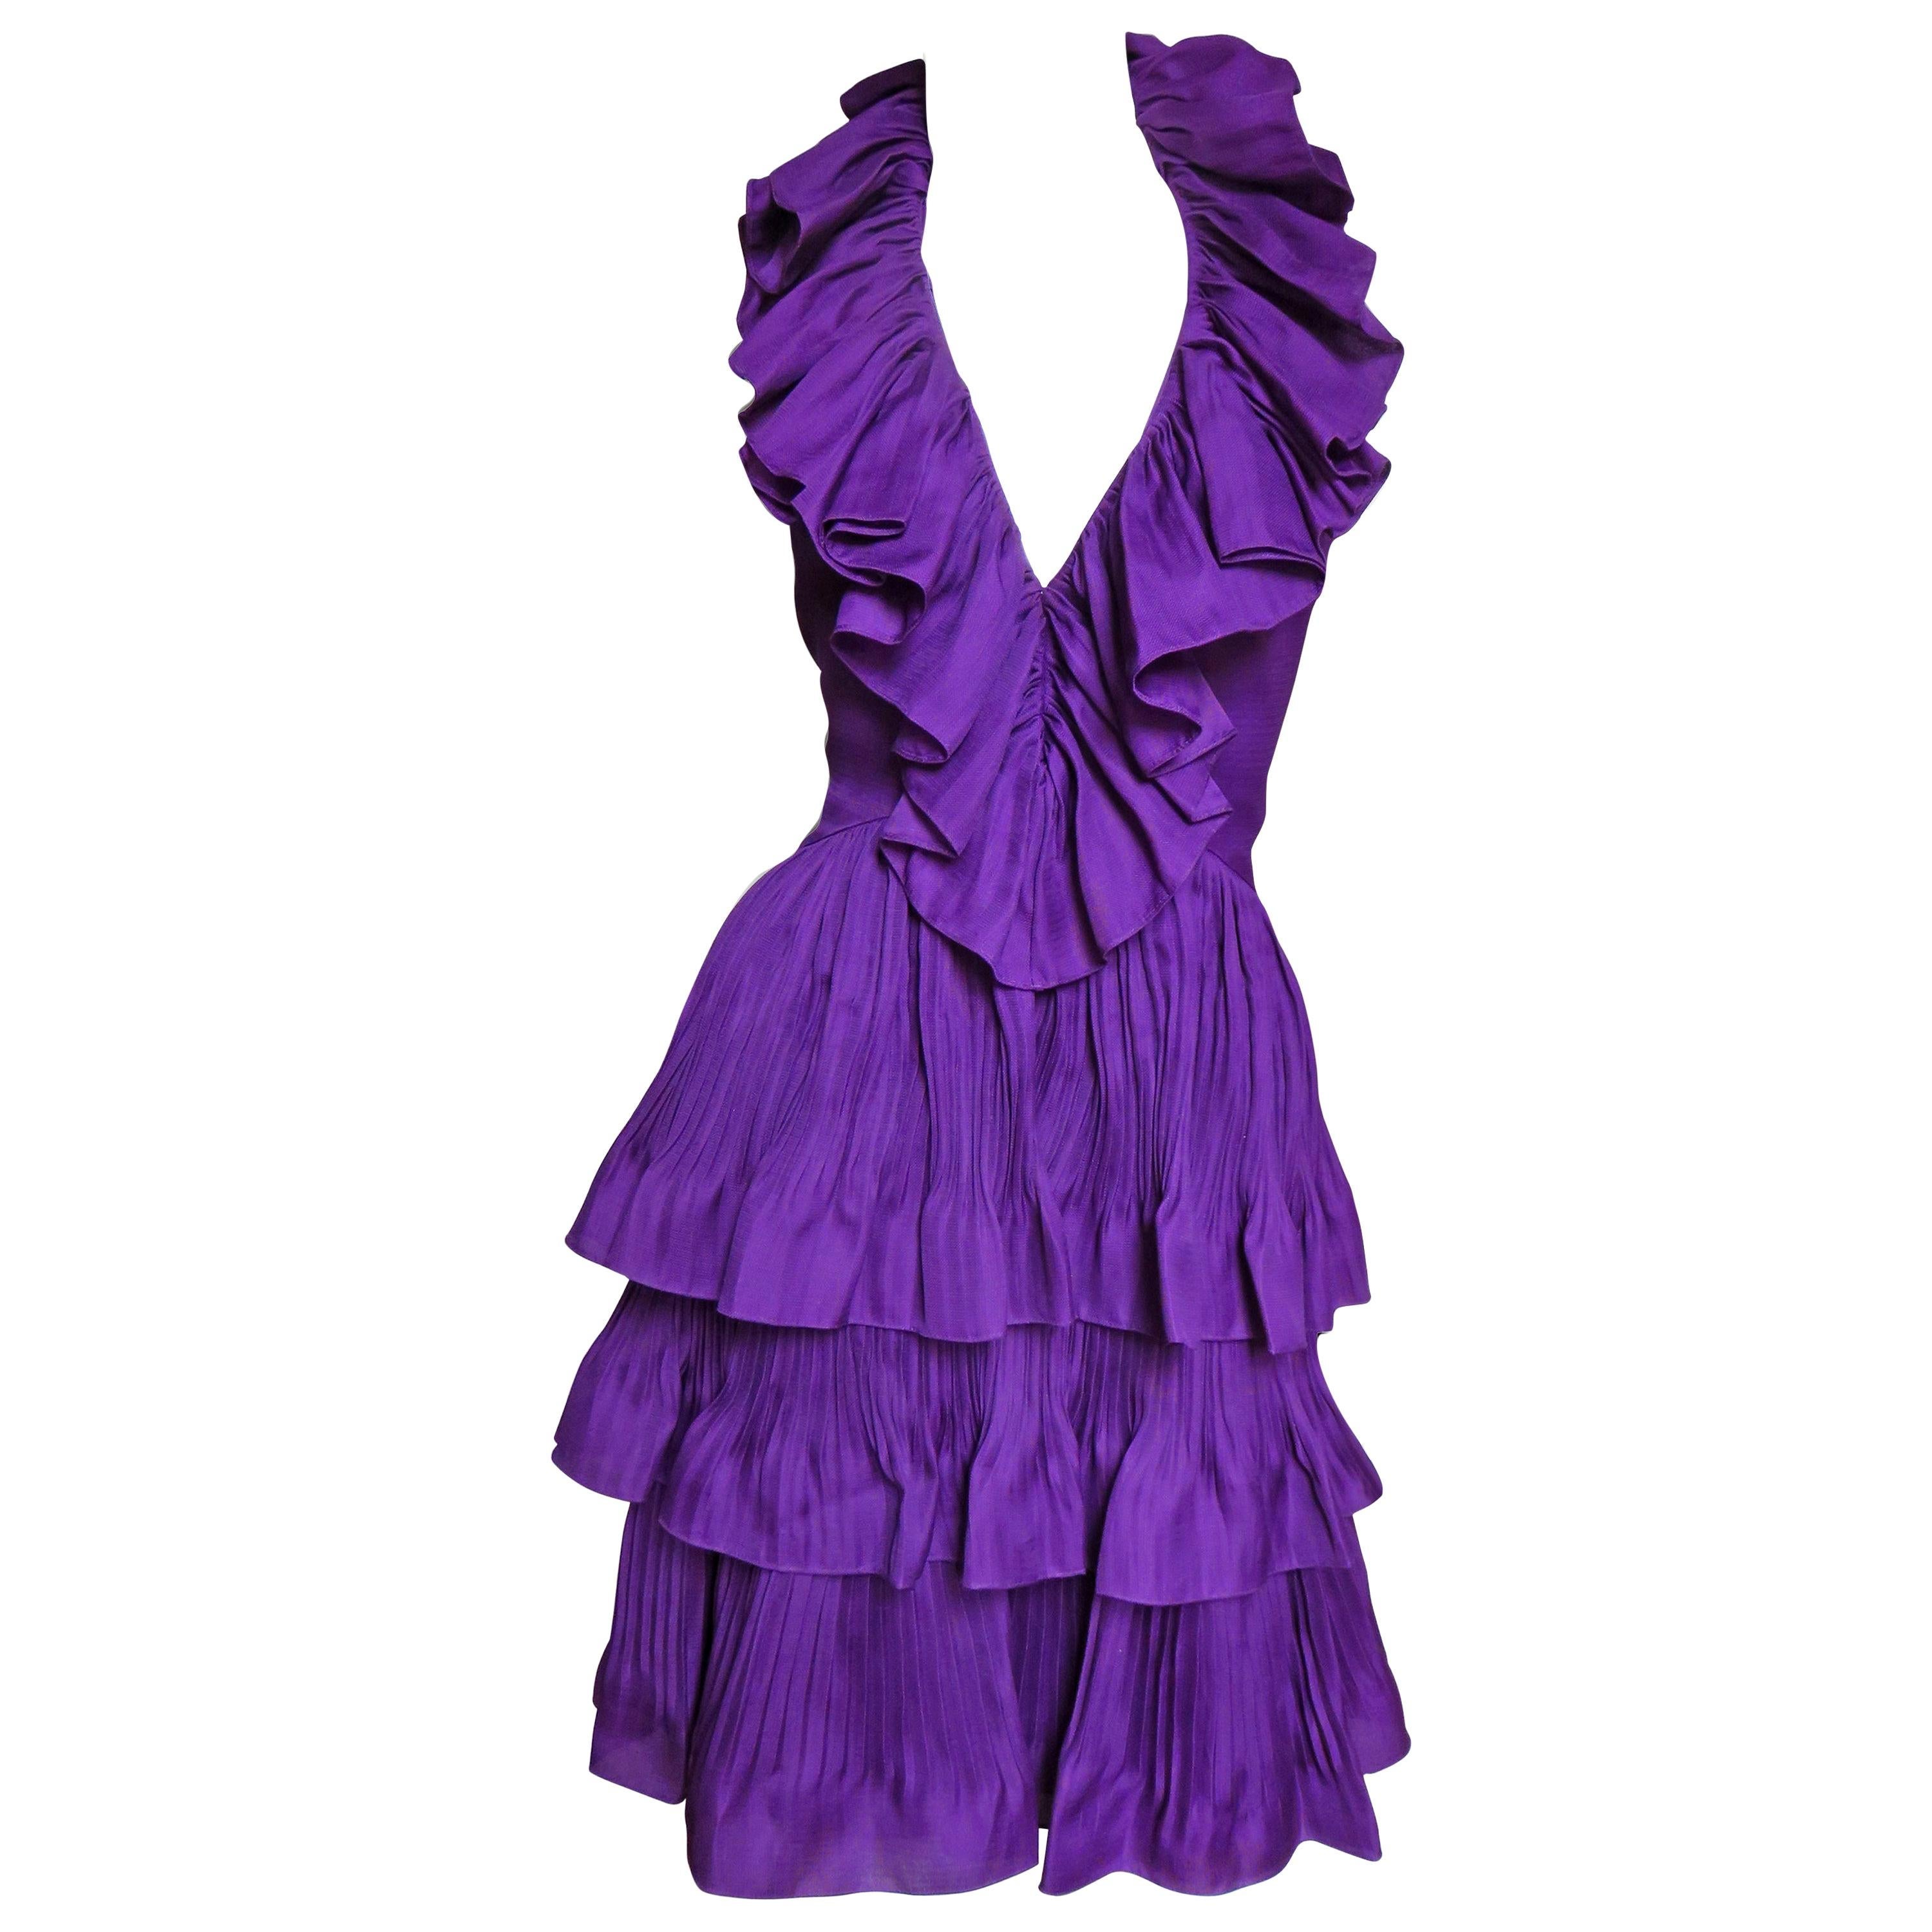 John Galliano for Christian Dior S/S 2009 Silk Halter Dress For Sale